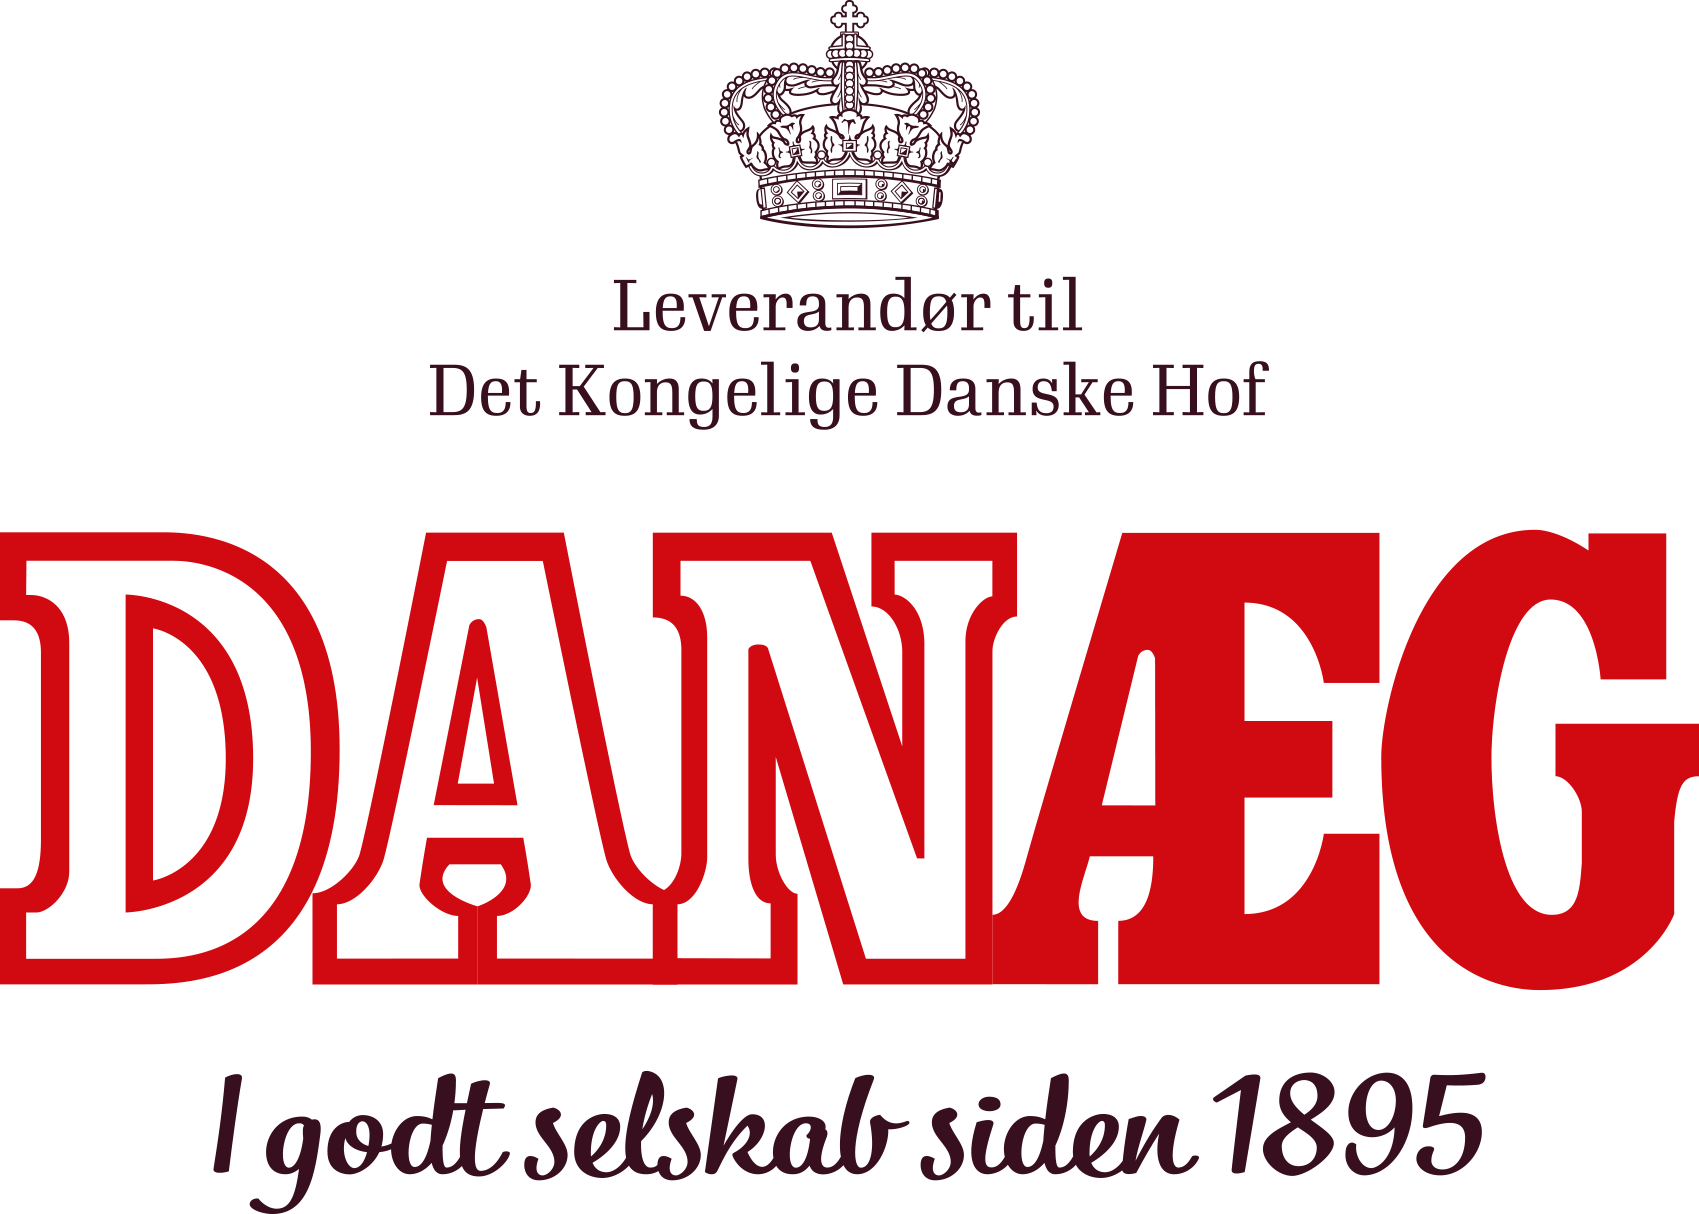 The DANÆG Group